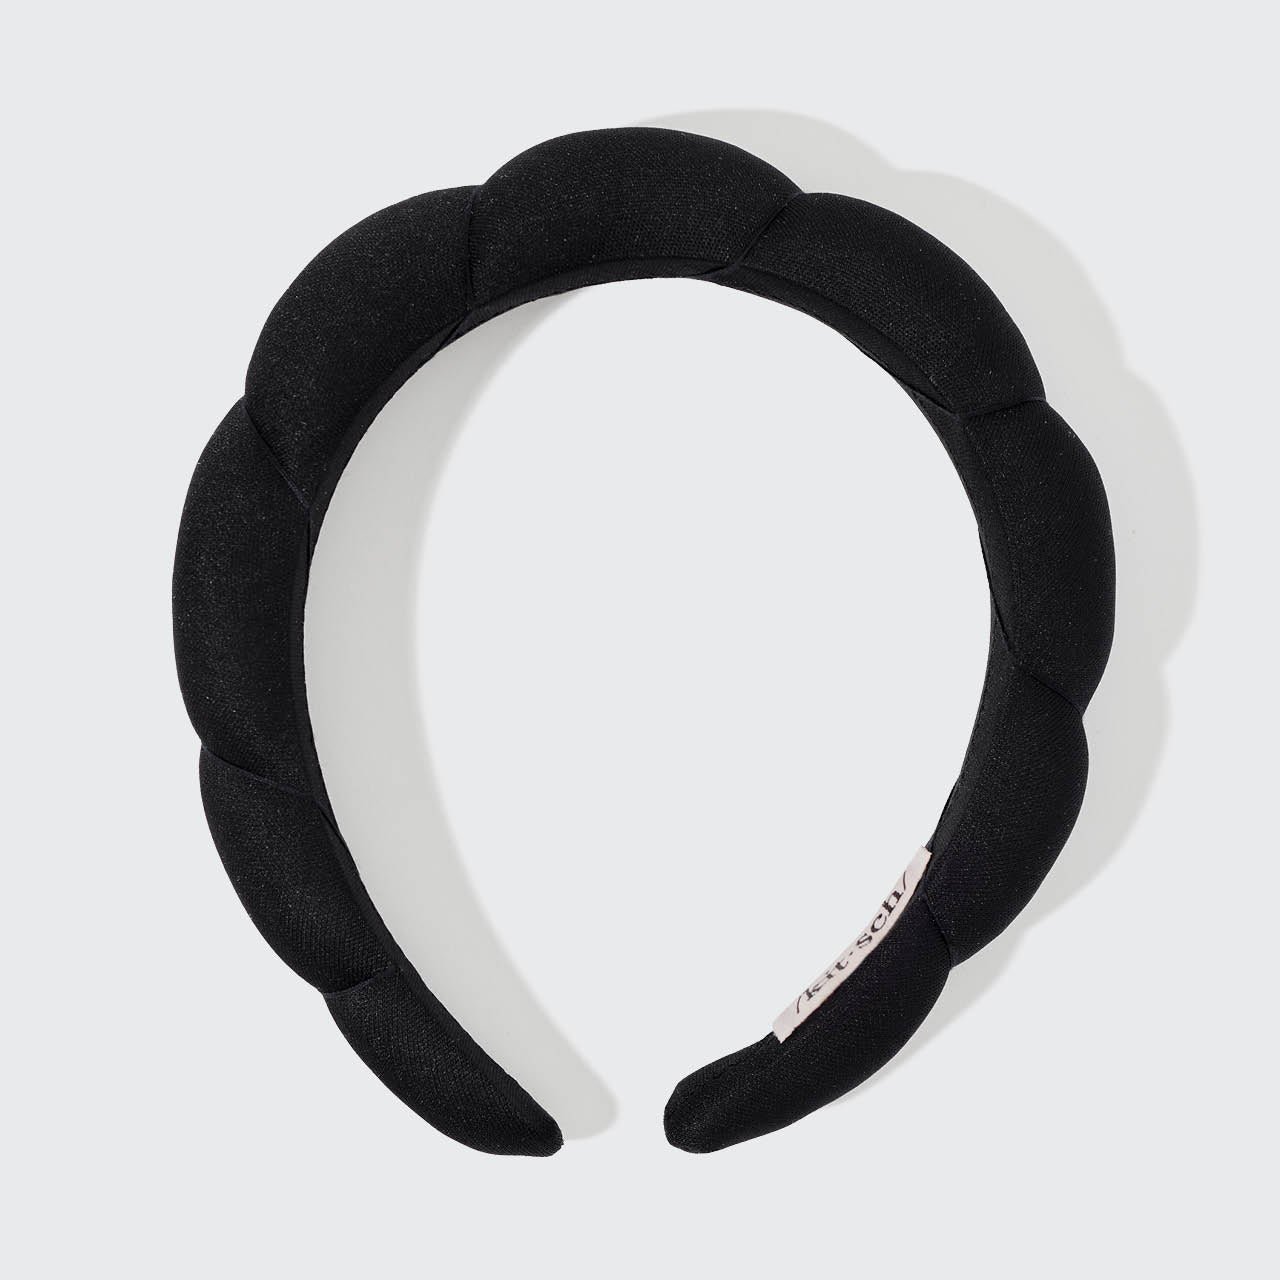 Recycled Fabric Puffy Headband 1pc - Black